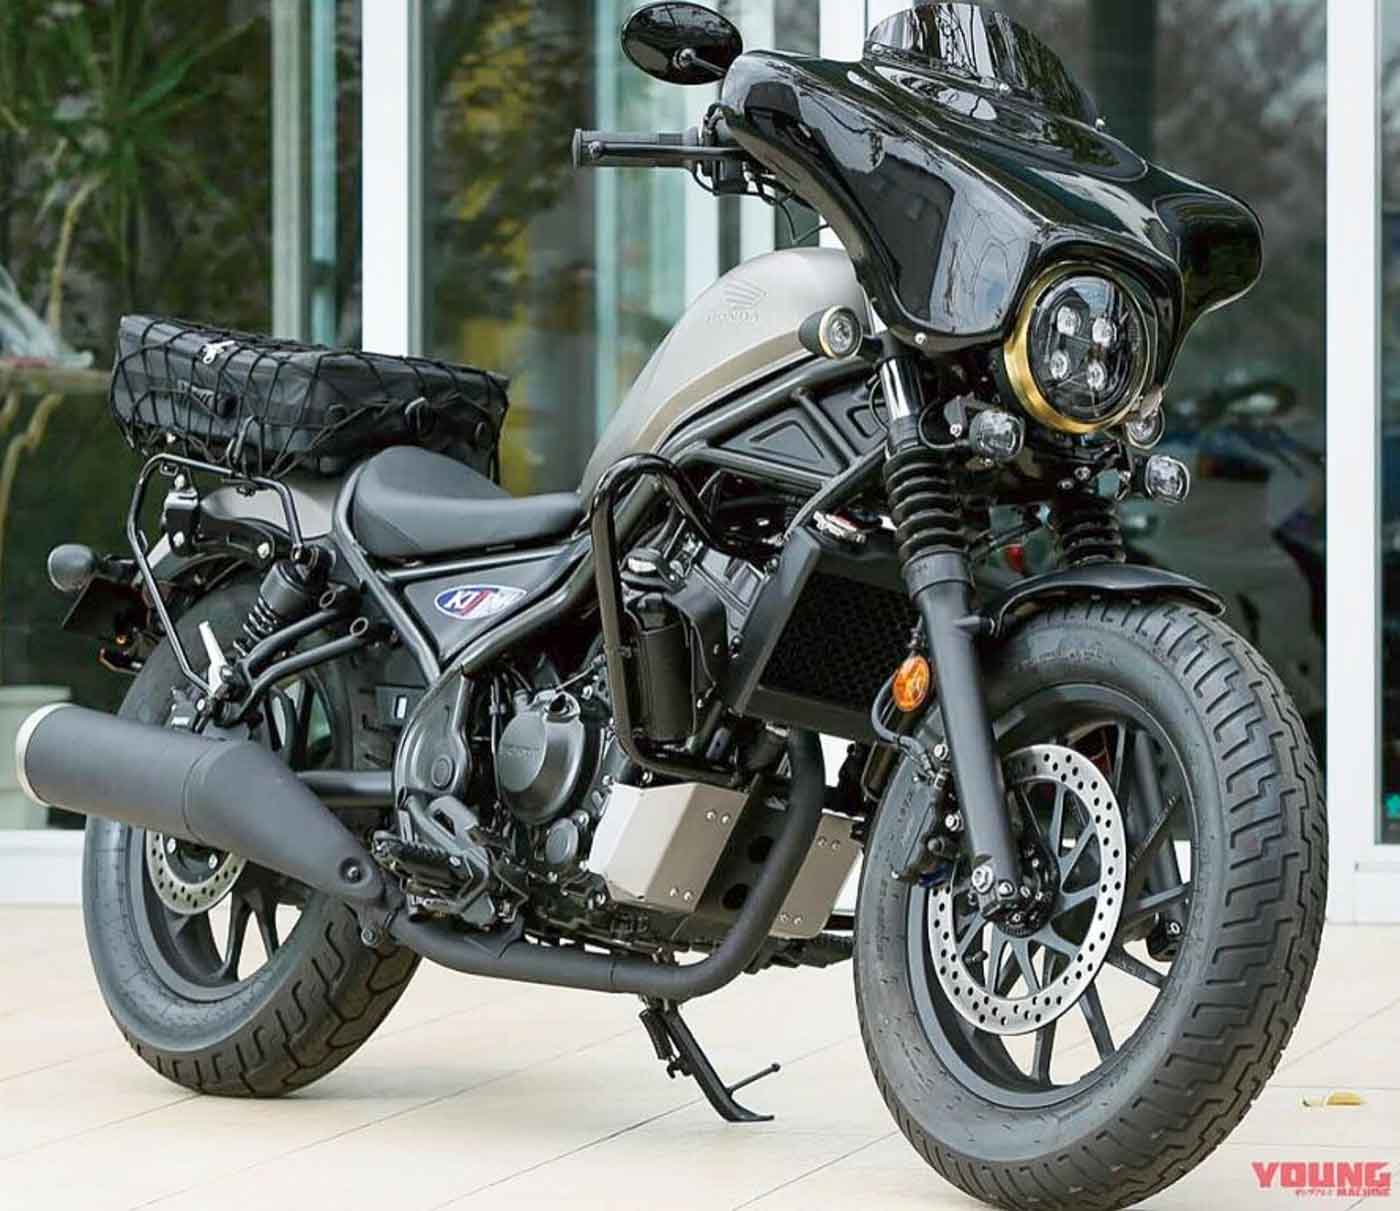 Honda Rebel Cruiser Customised To Look A Lot Like A Harley Davidson